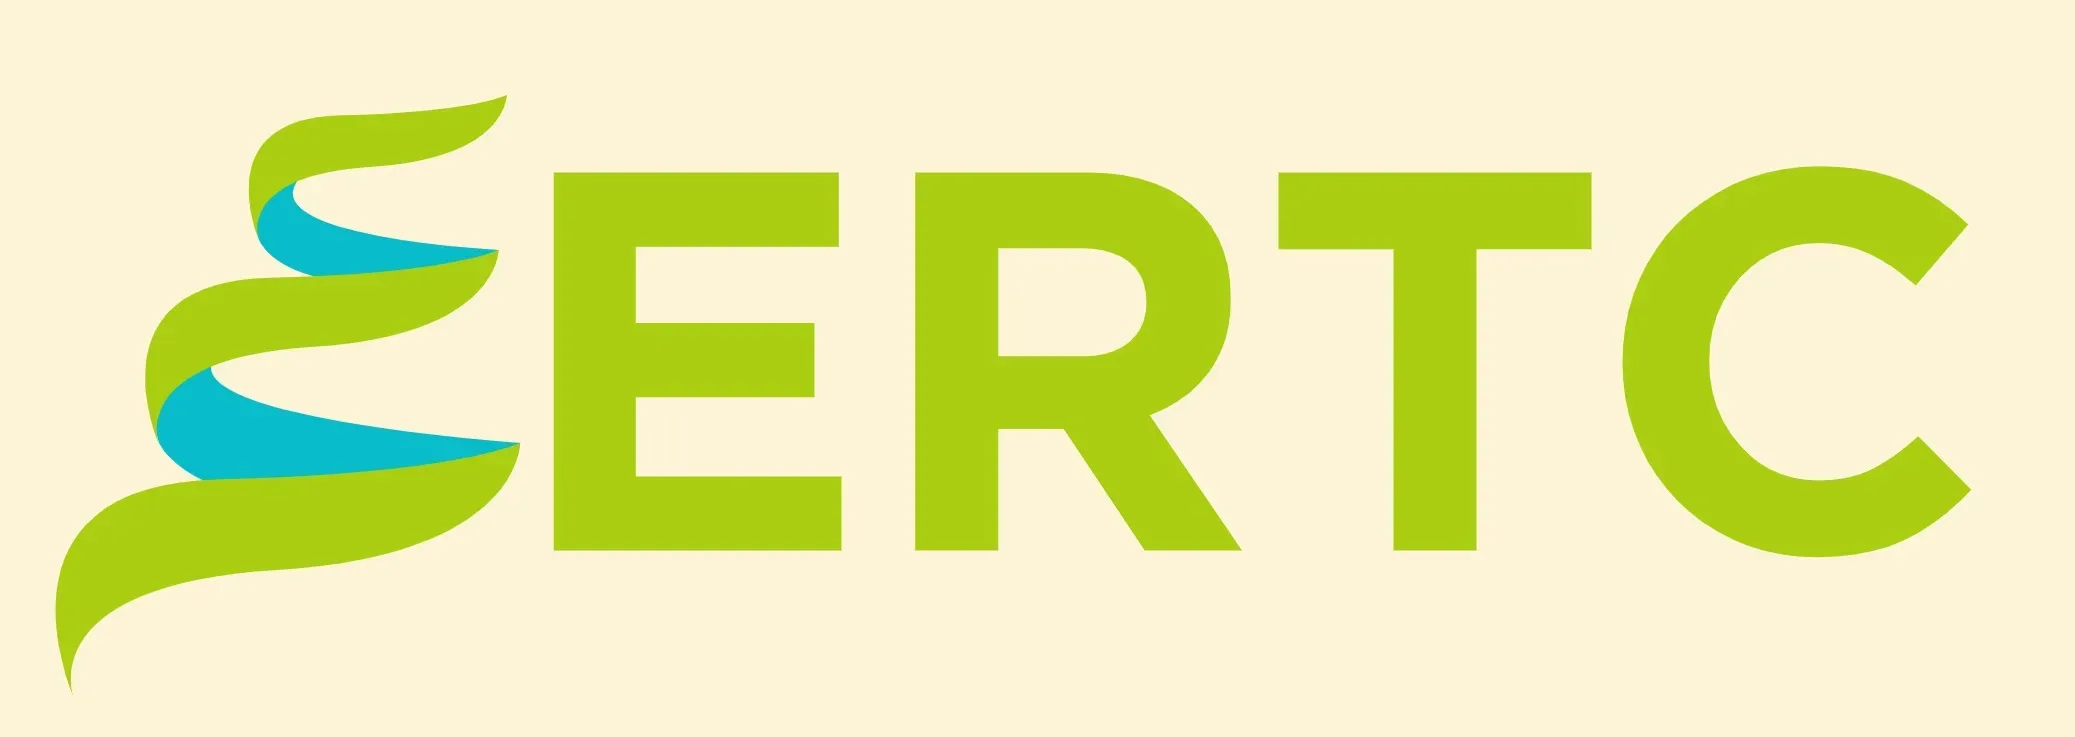 ERTC Express Reviews Logo